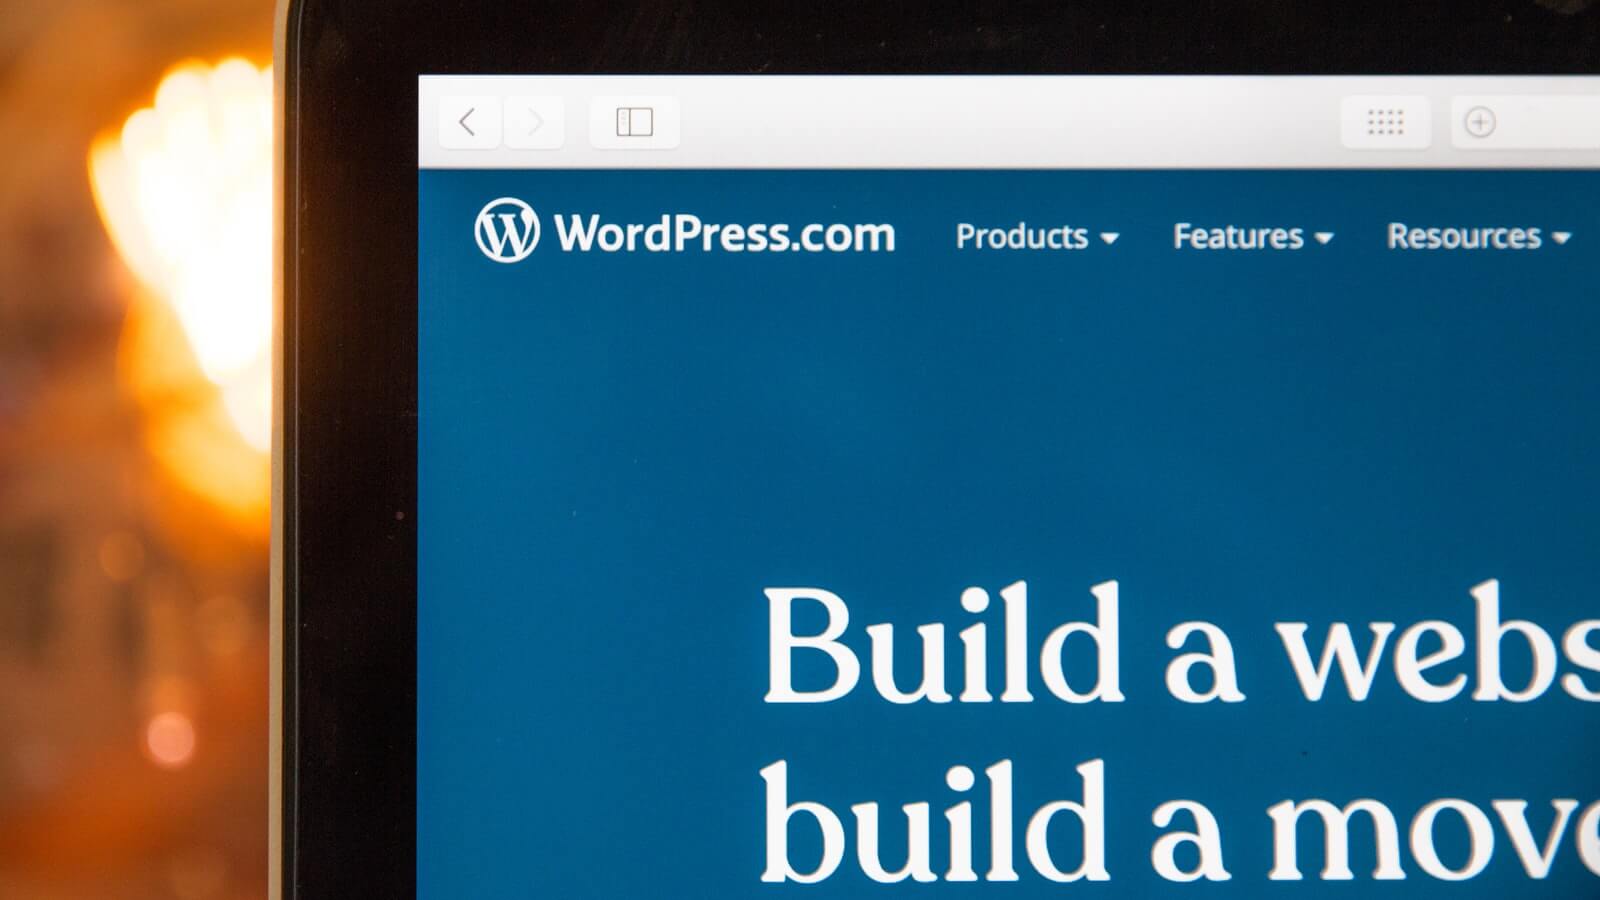 Useful 7 WordPress Design Tips on Making a Mobile Compatible Website